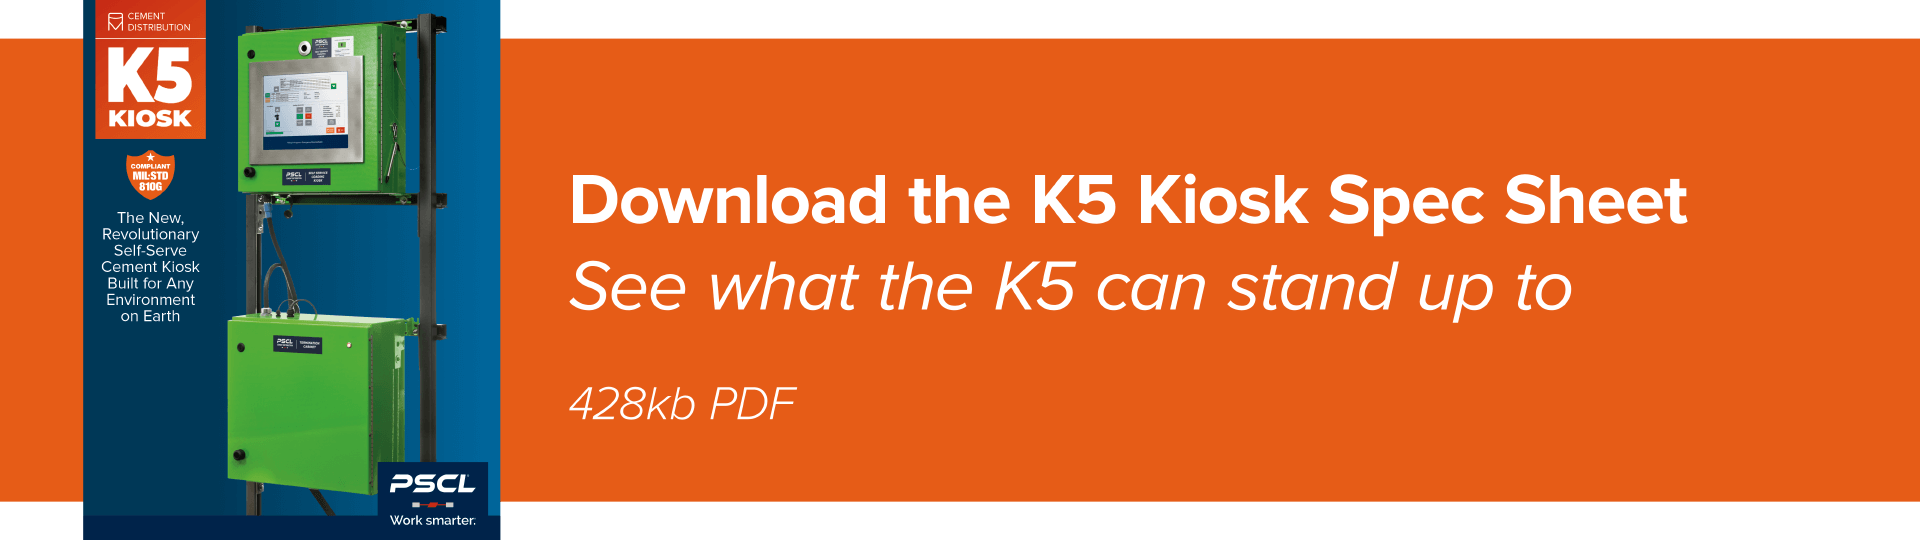 PSCL K5 Kiosk Spec Sheet Download